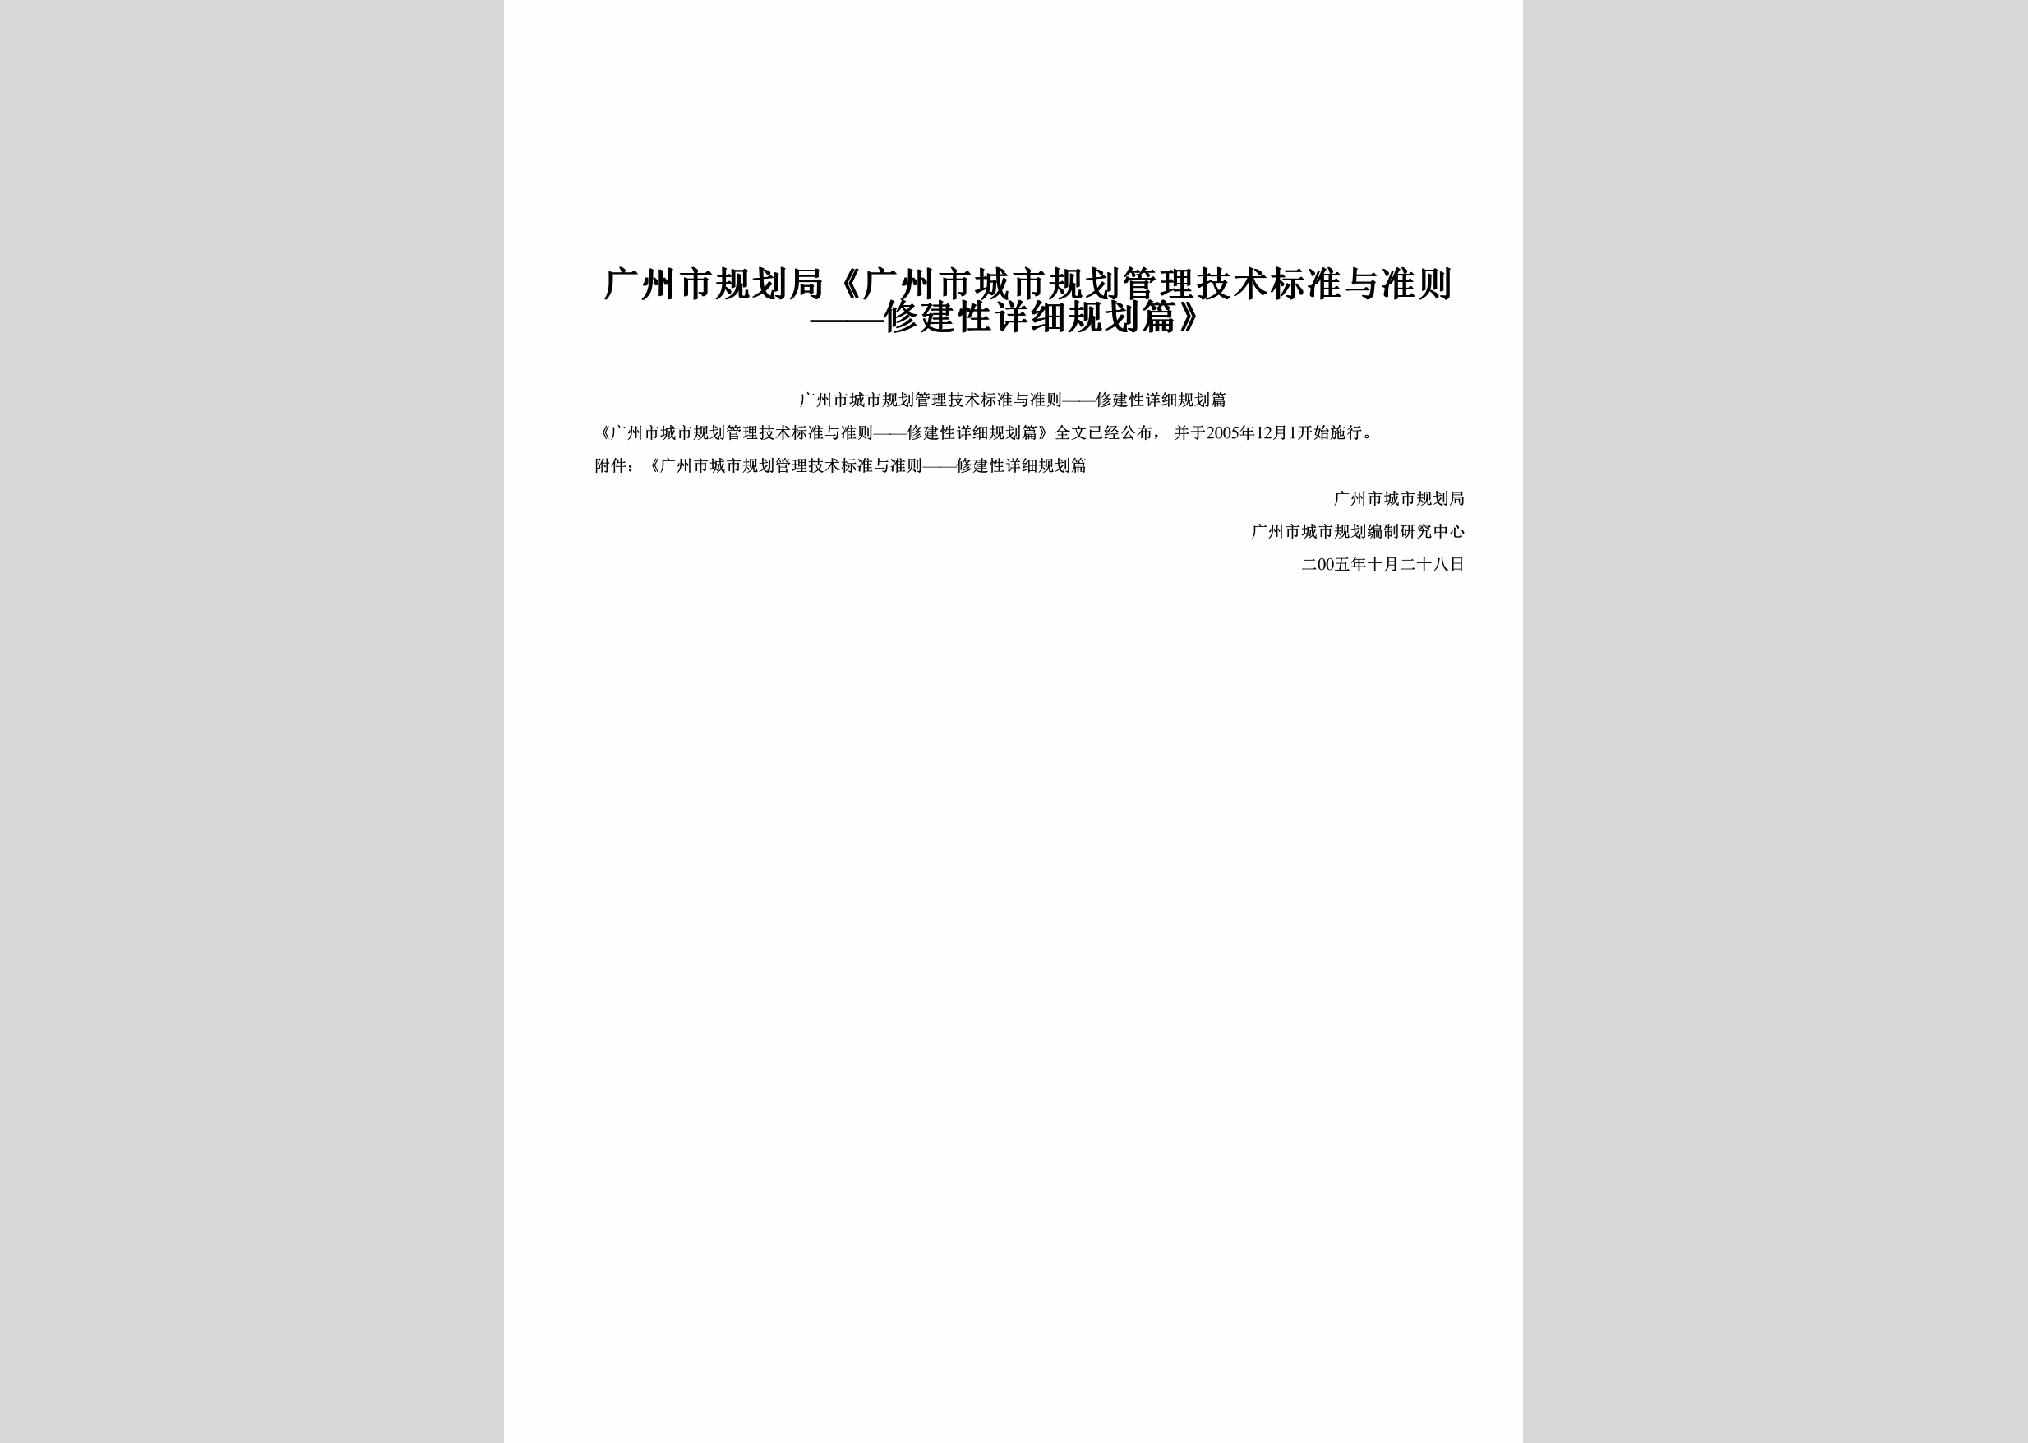 GD-GZSCSGHG-2005：《广州市城市规划管理技术标准与准则——修建性详细规划篇》